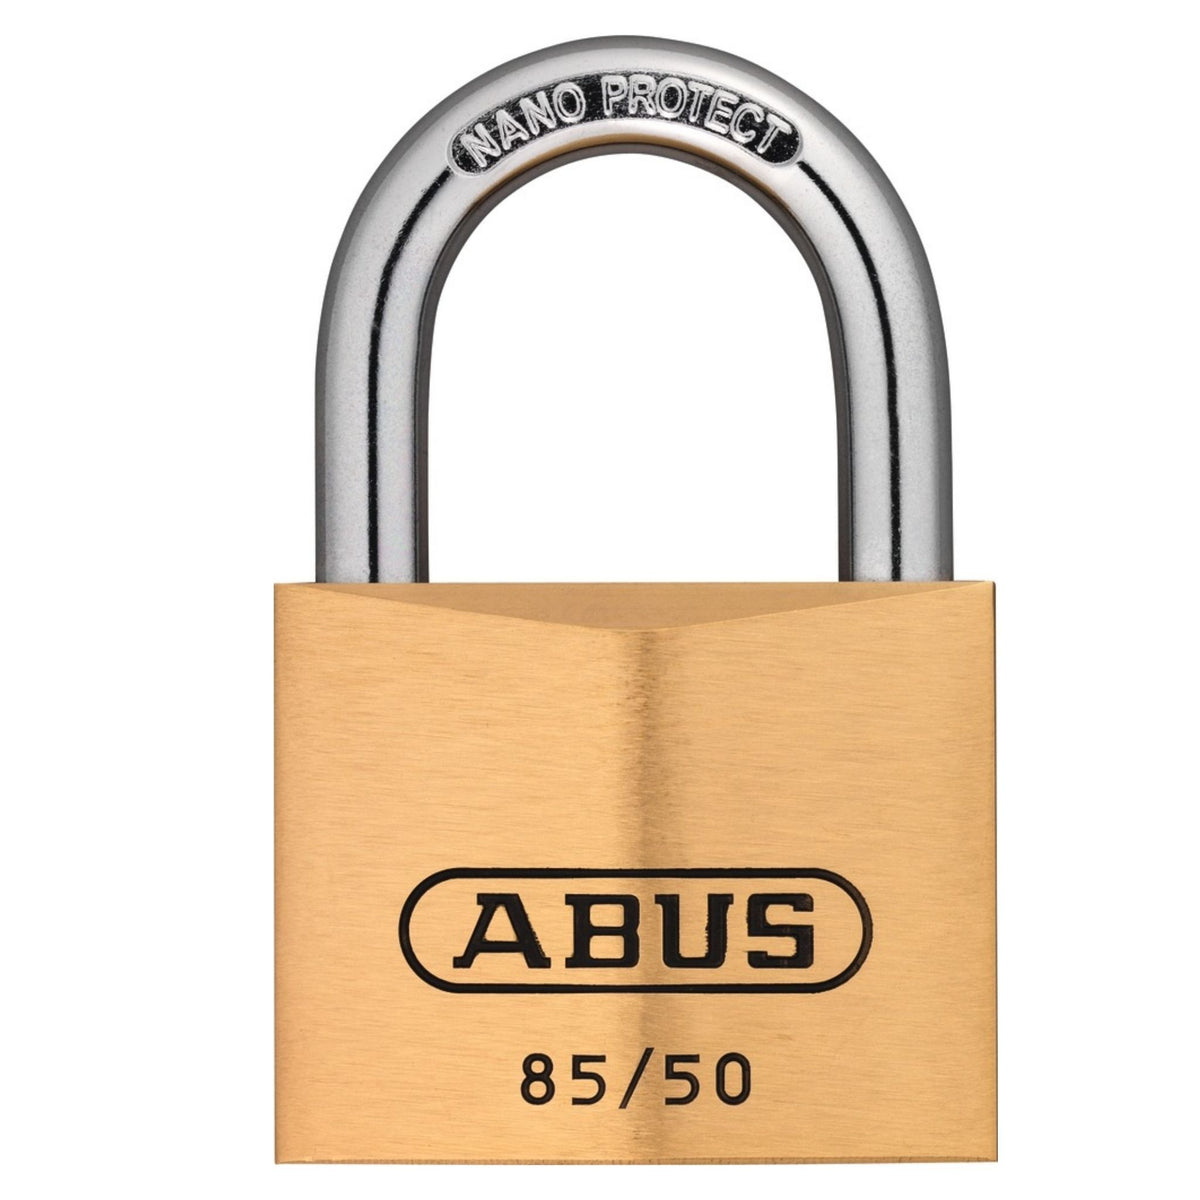 Abus 85/50 KA 1055 Brass Lock High Security Padlocks Keyed Alike to Match Existing Key Number KA1055 - The Lock Source